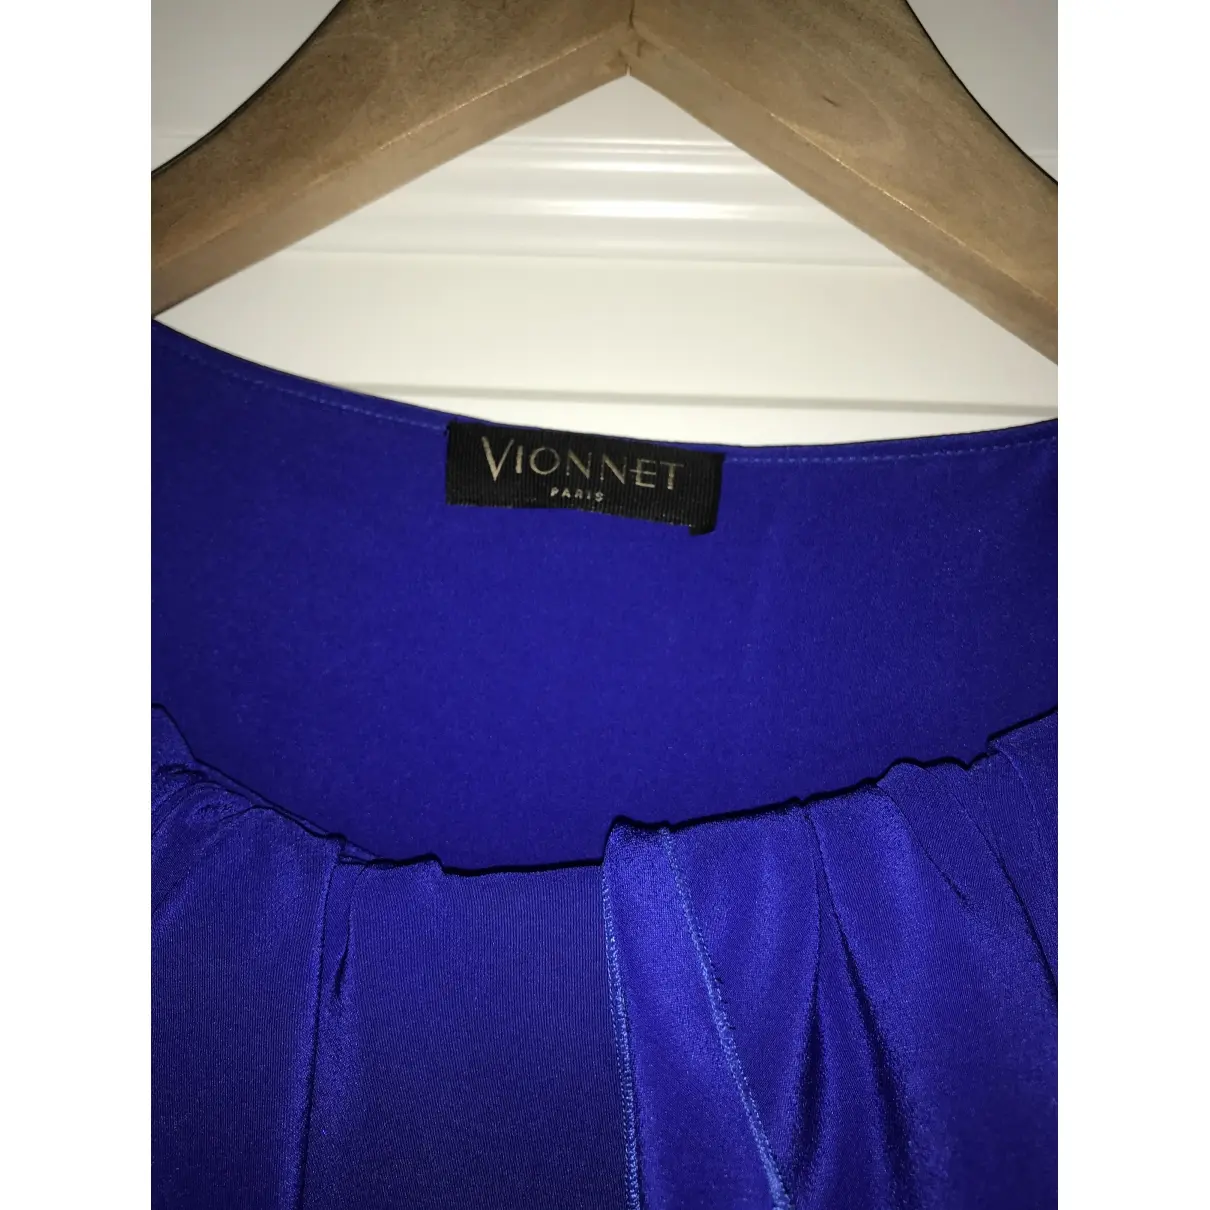 Buy Vionnet Silk blouse online